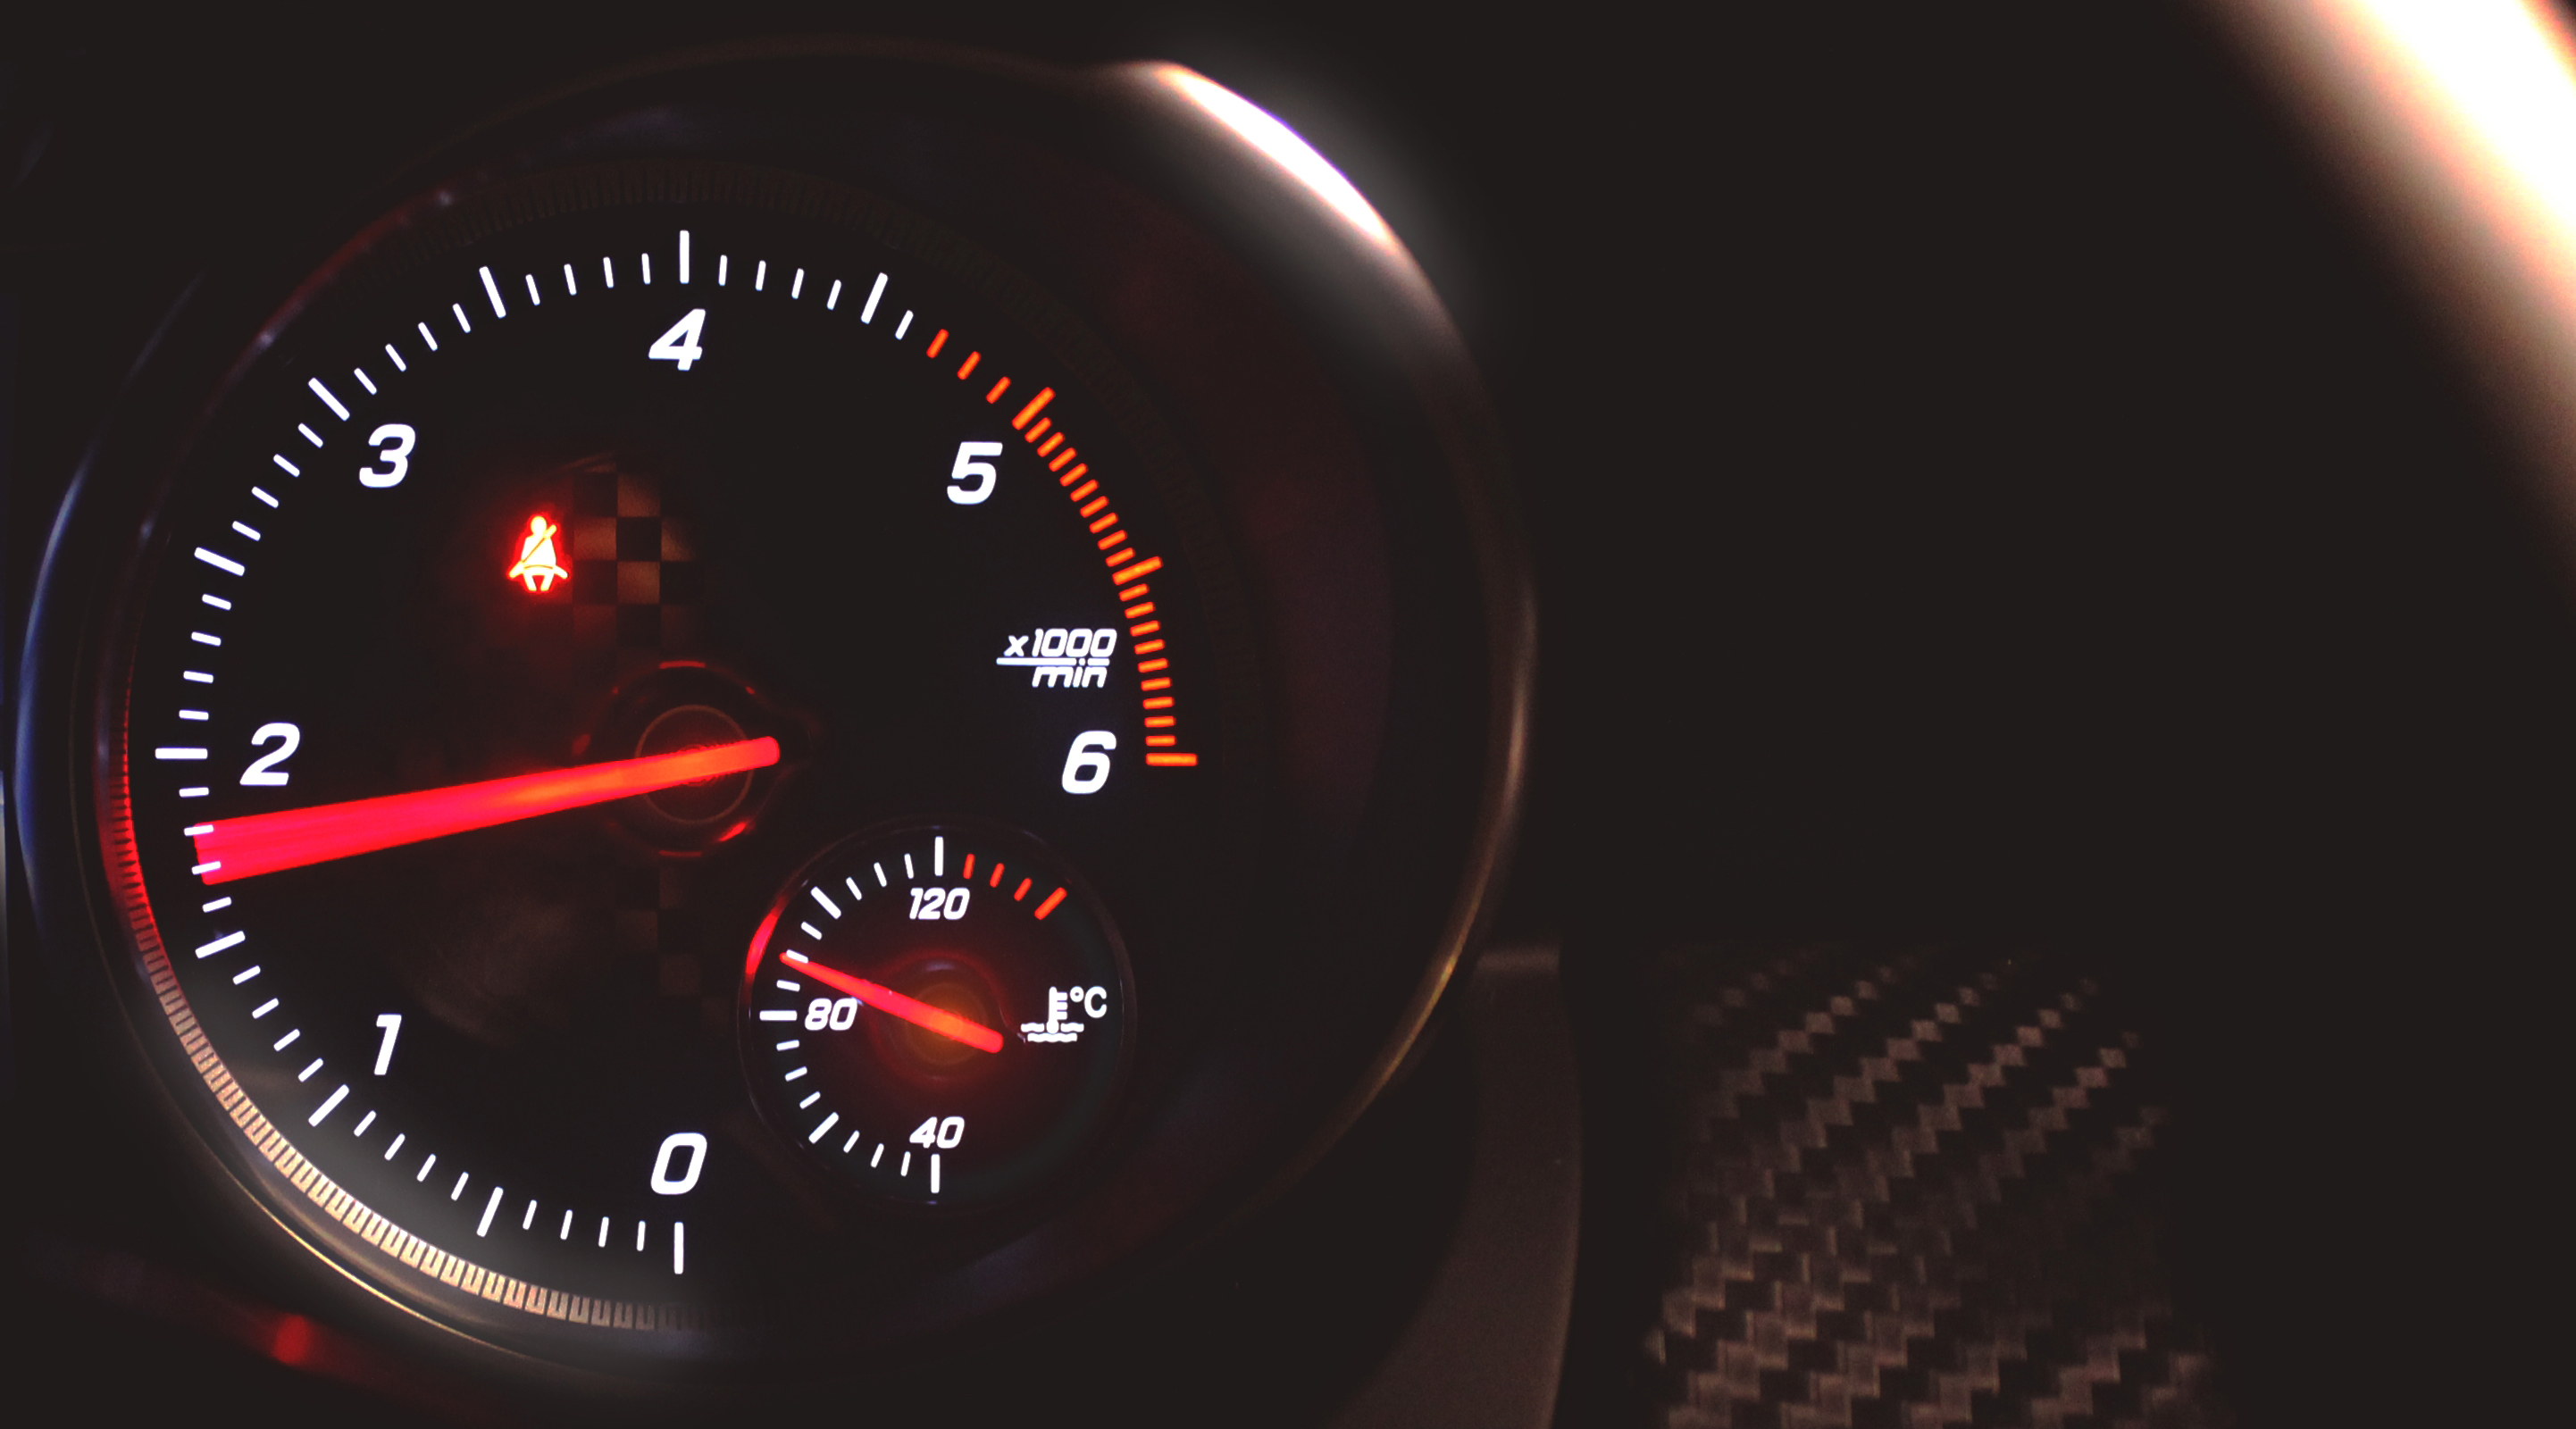 Sports car tachometer speeding - with copyspace photo